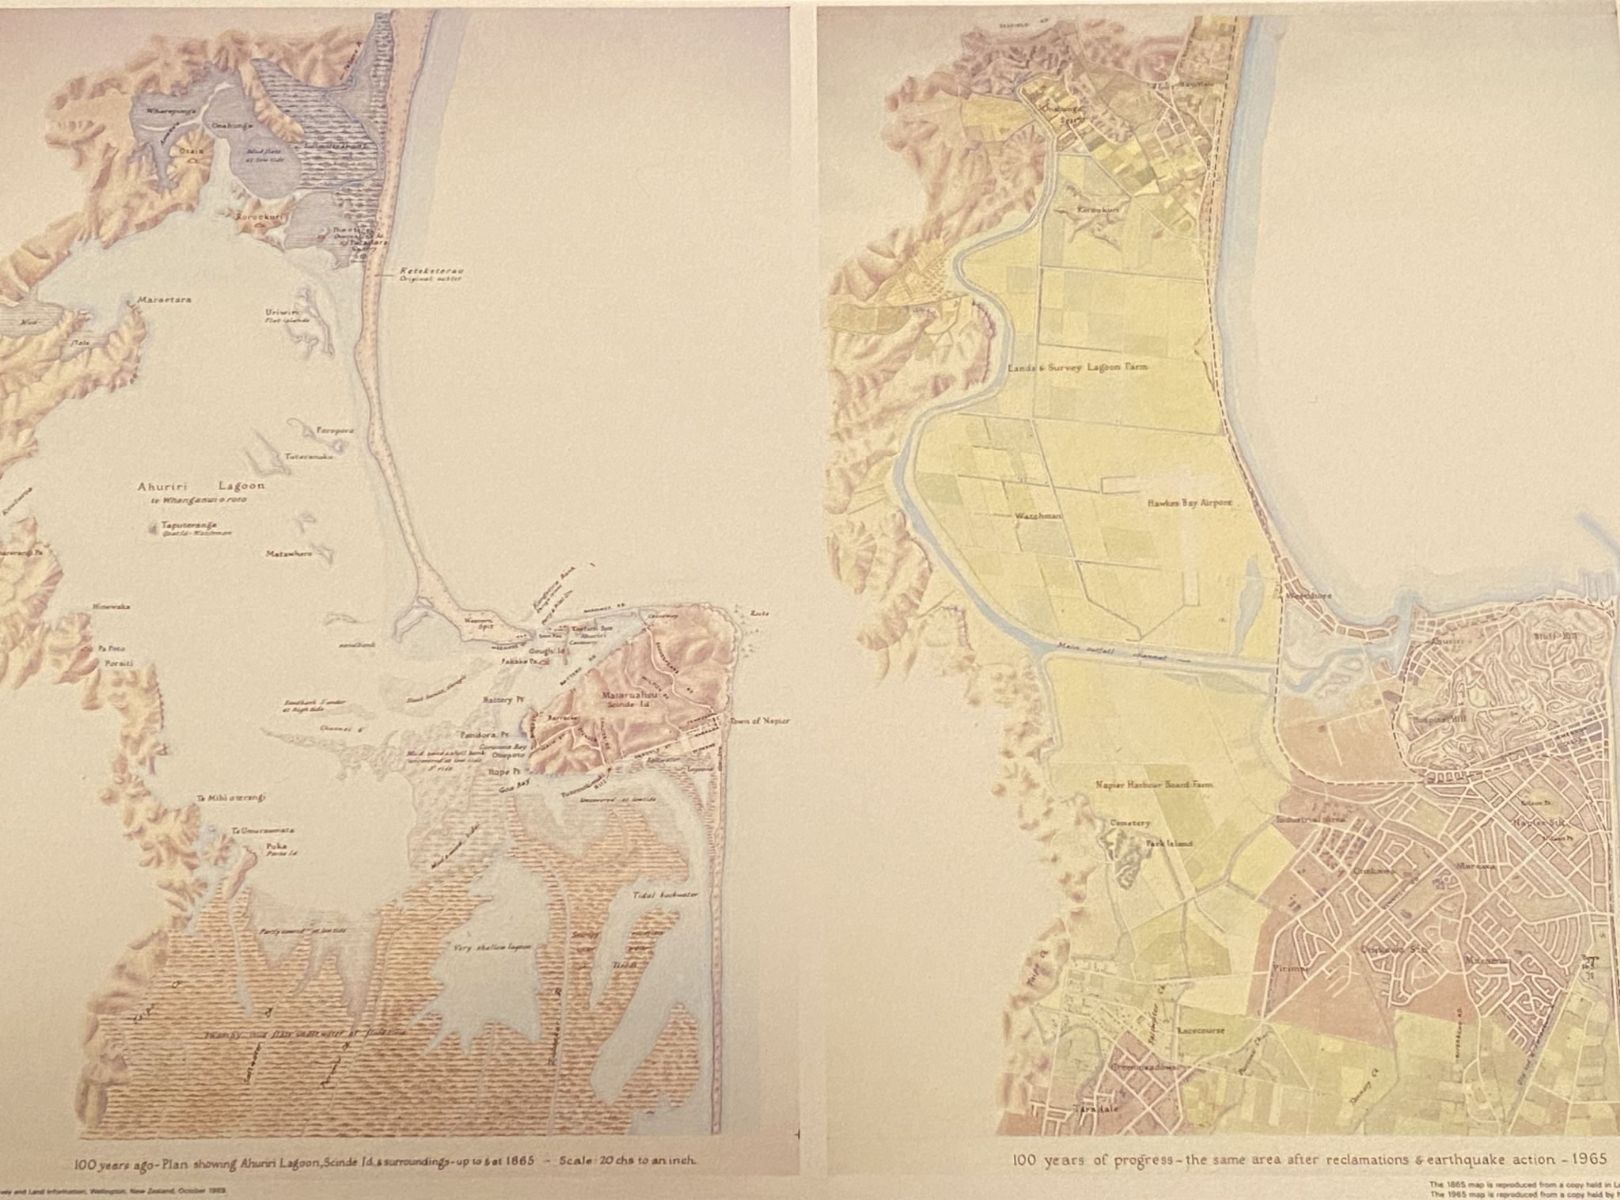 VINTAGE MAP: Napier pre and post earthquake 1865 and 1965